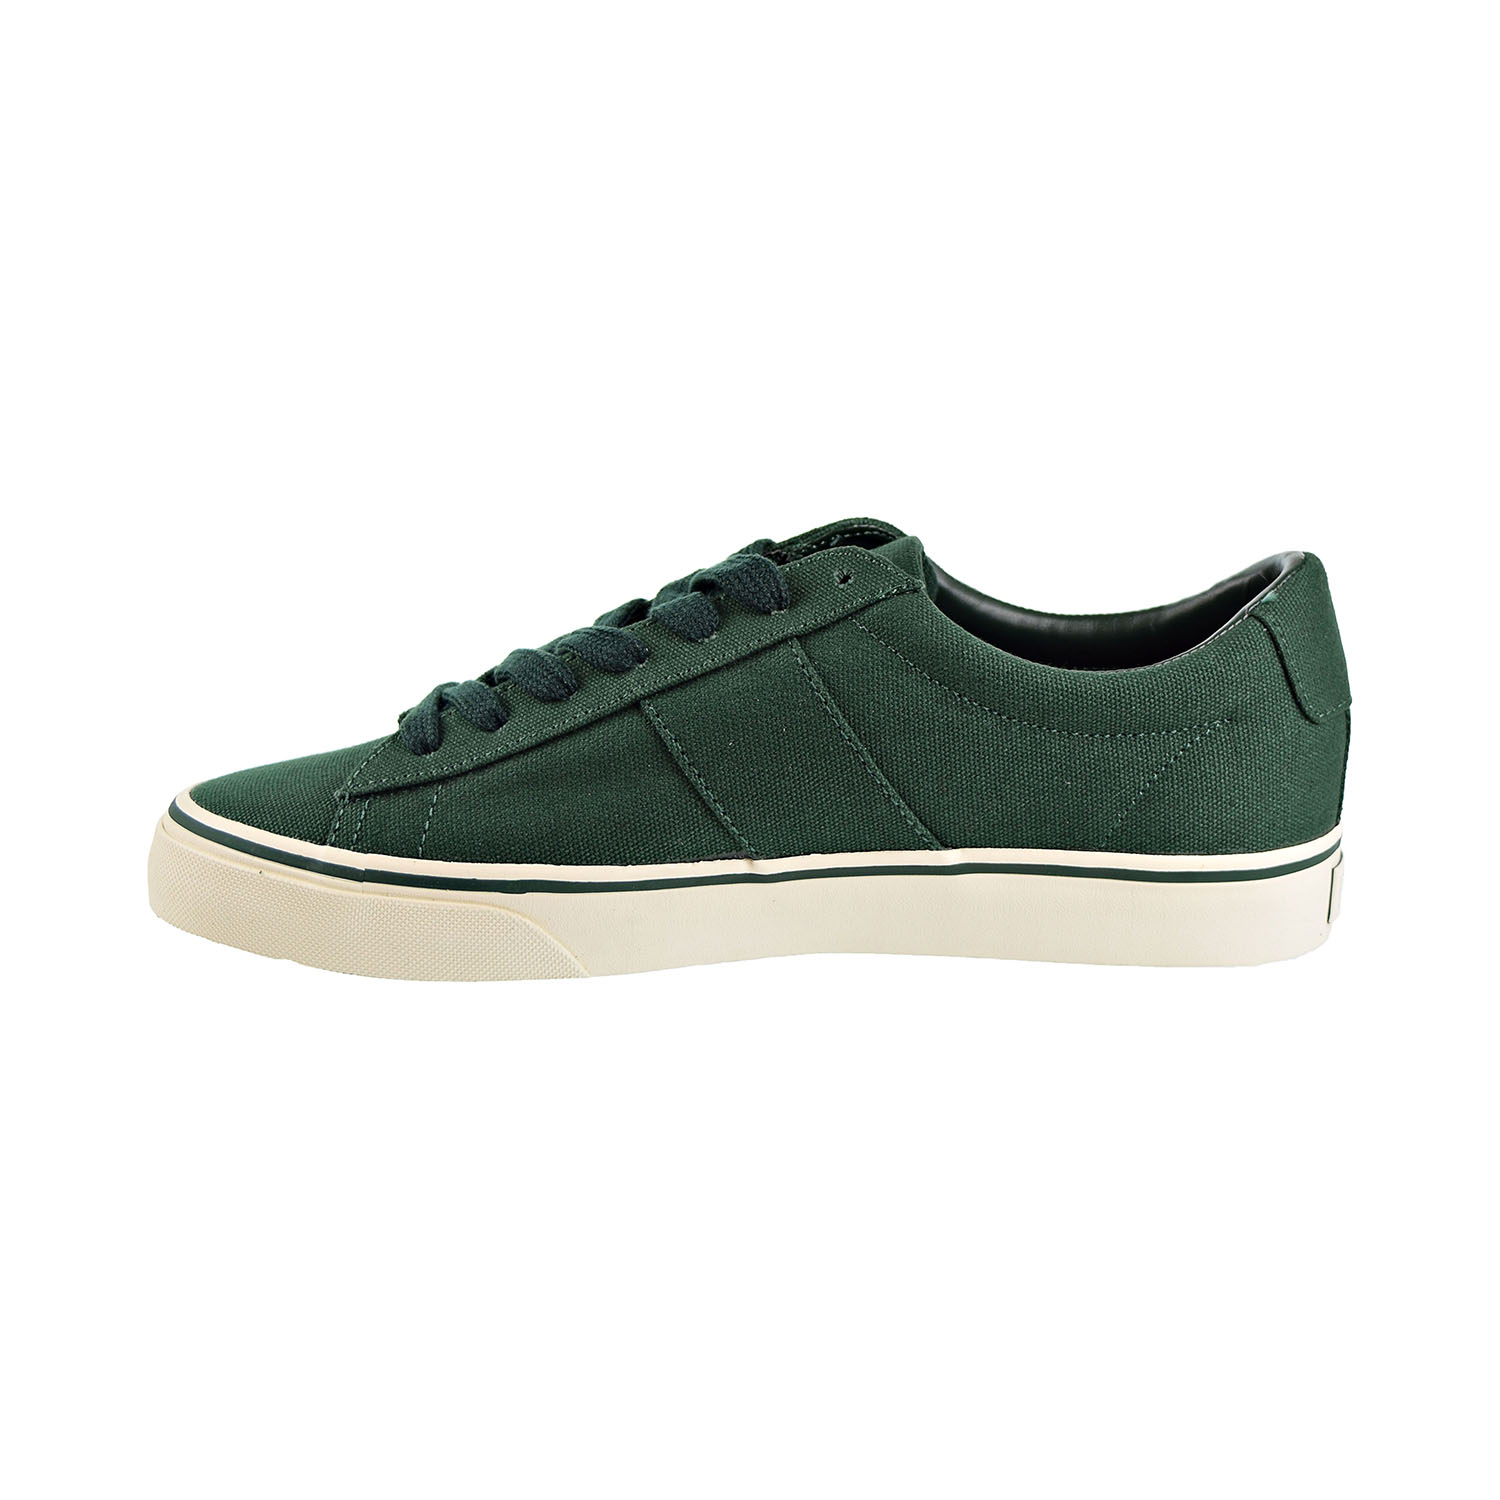 Polo Ralph Lauren Sayer Men's Shoes Green 816710017-002 - image 4 of 6